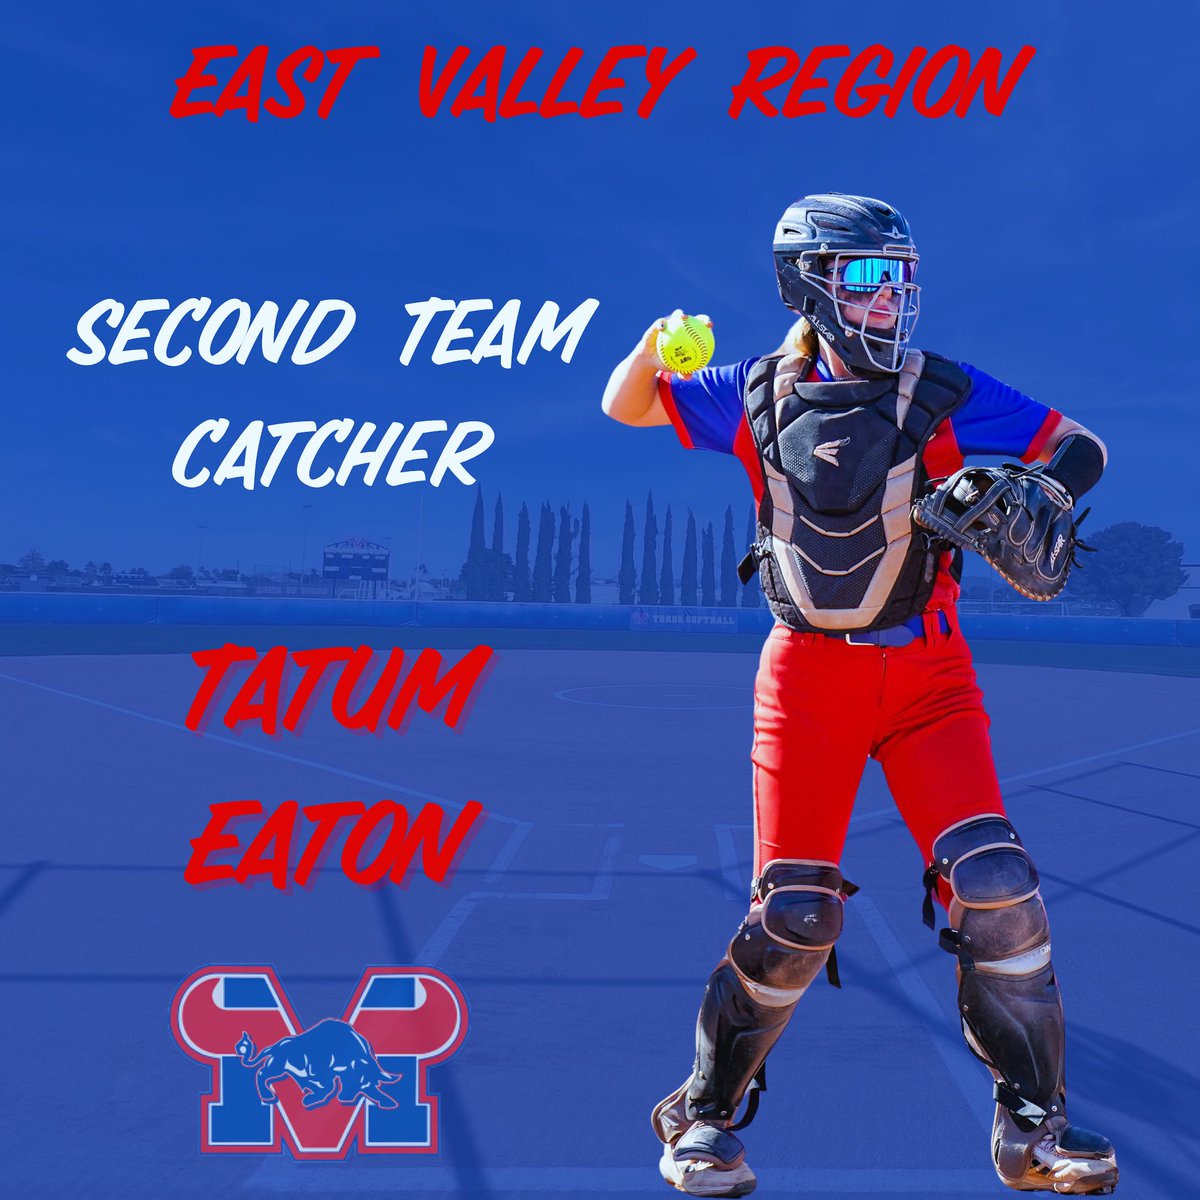 Junior Tatum Eaton is awarded Second Team Catcher for East Valley Region. Congratulations on a great season Tatum!